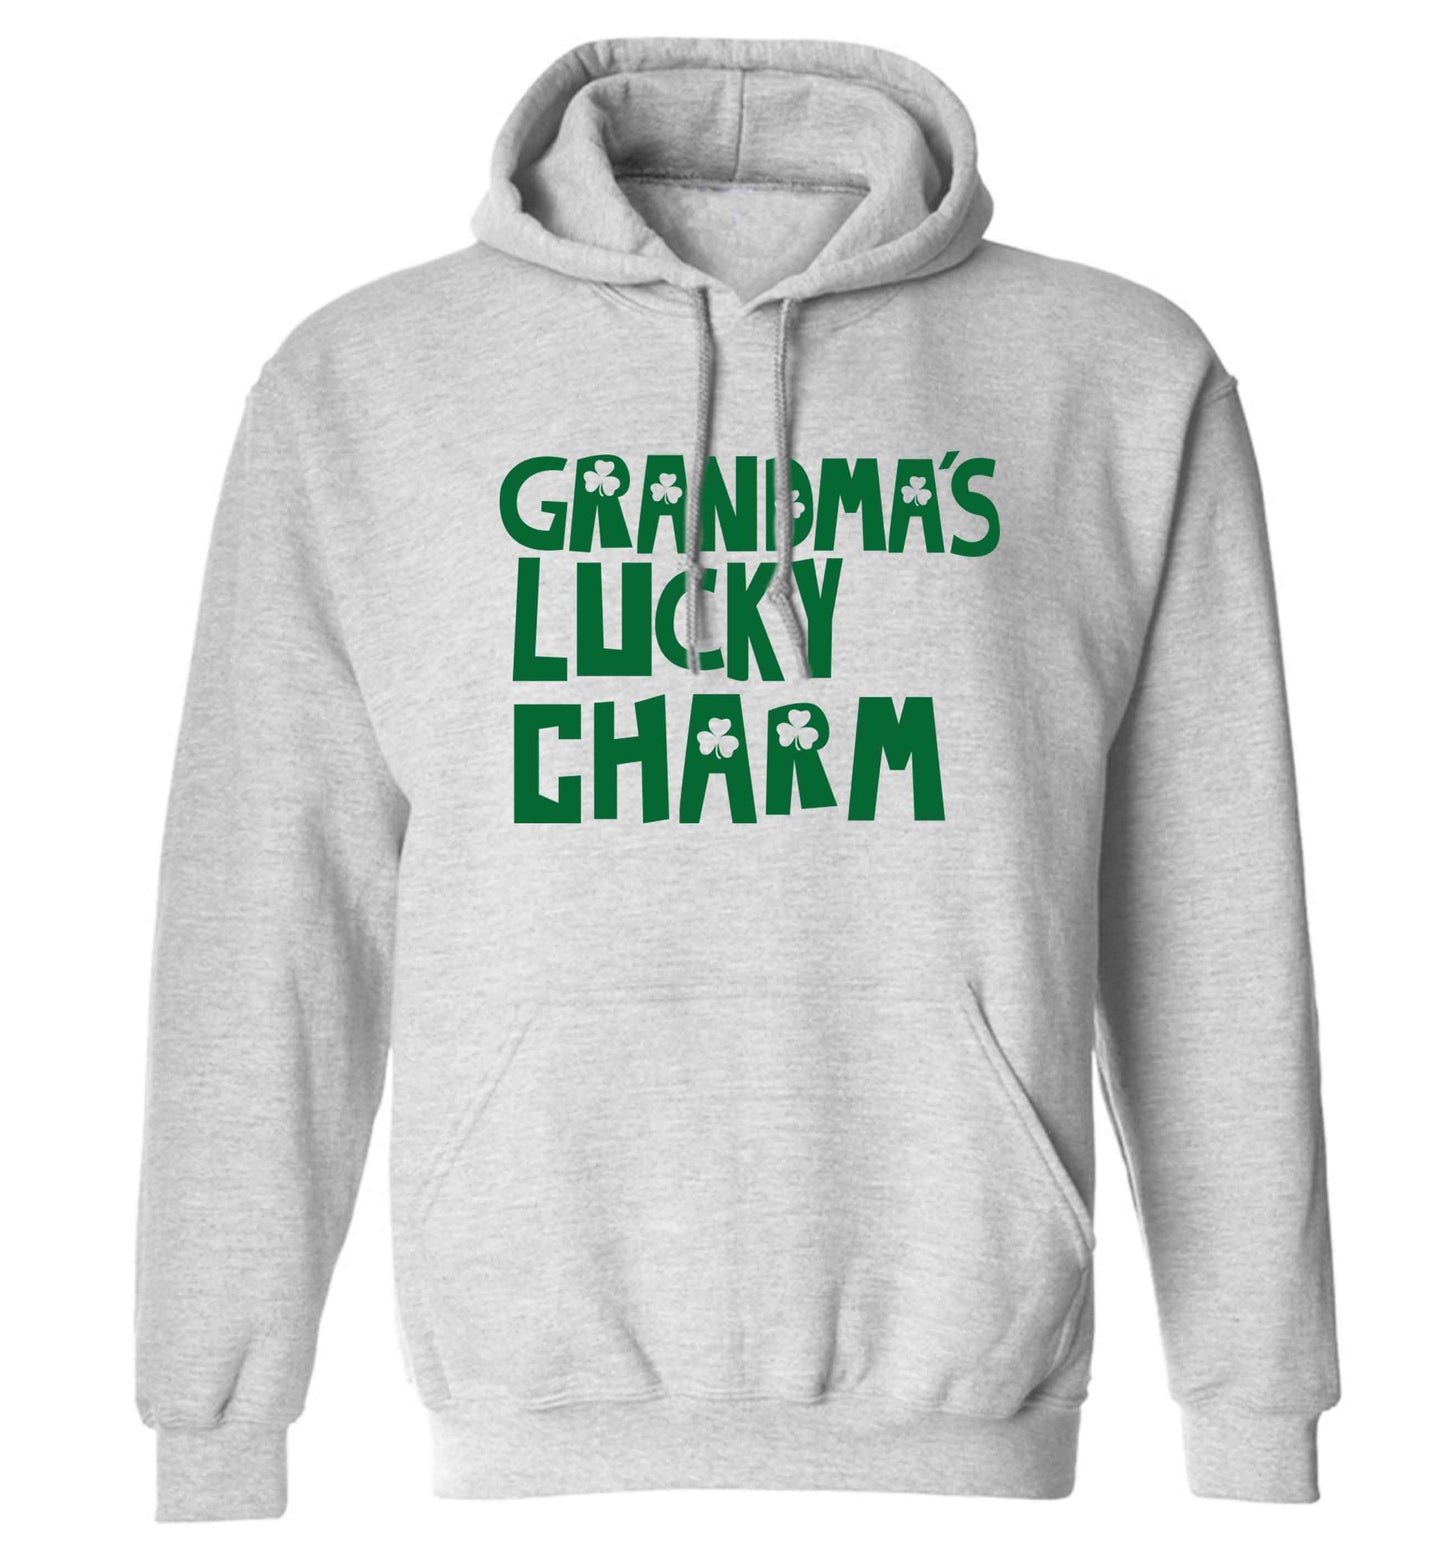 Grandma's lucky charm adults unisex grey hoodie 2XL